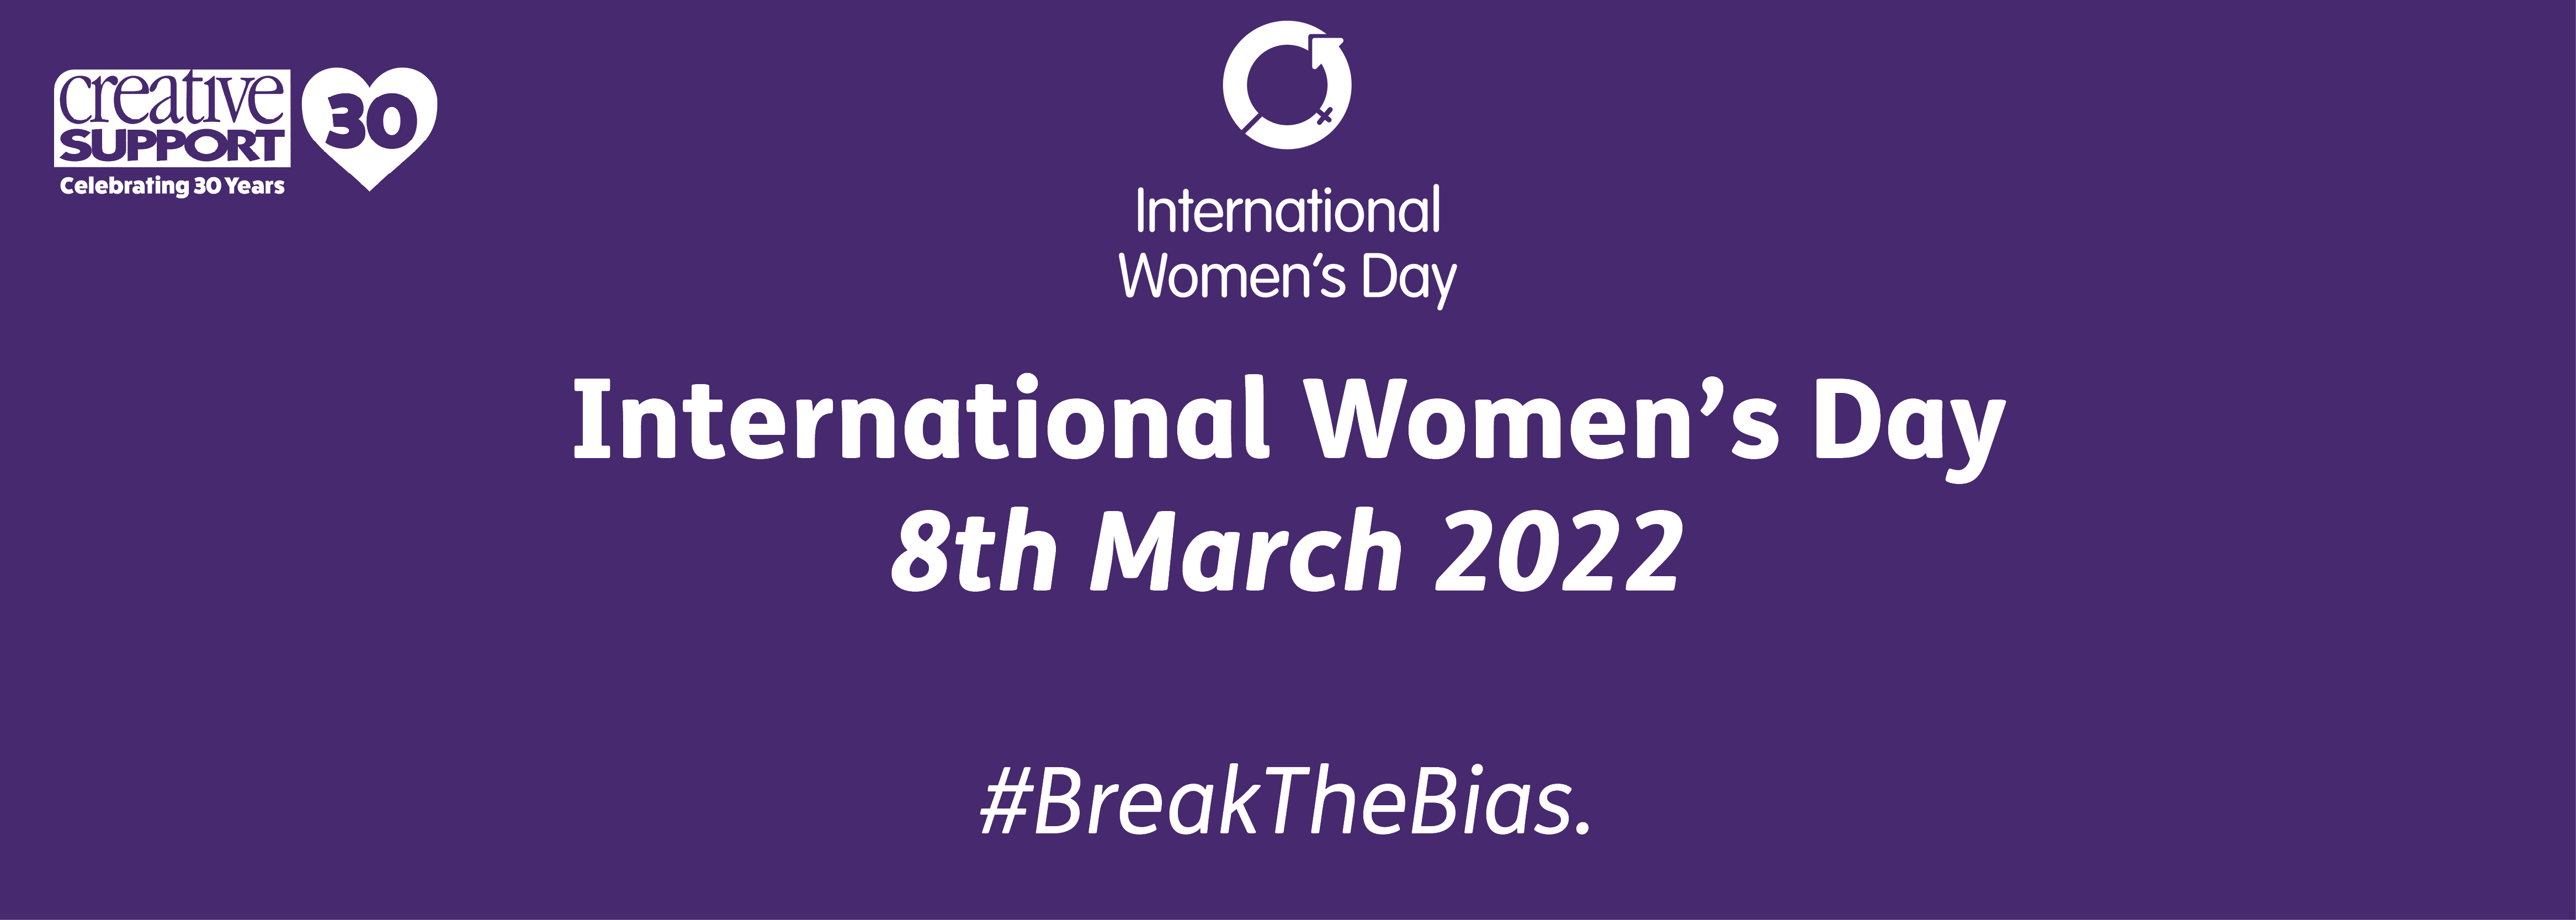 Get involved in International Women’s Day!